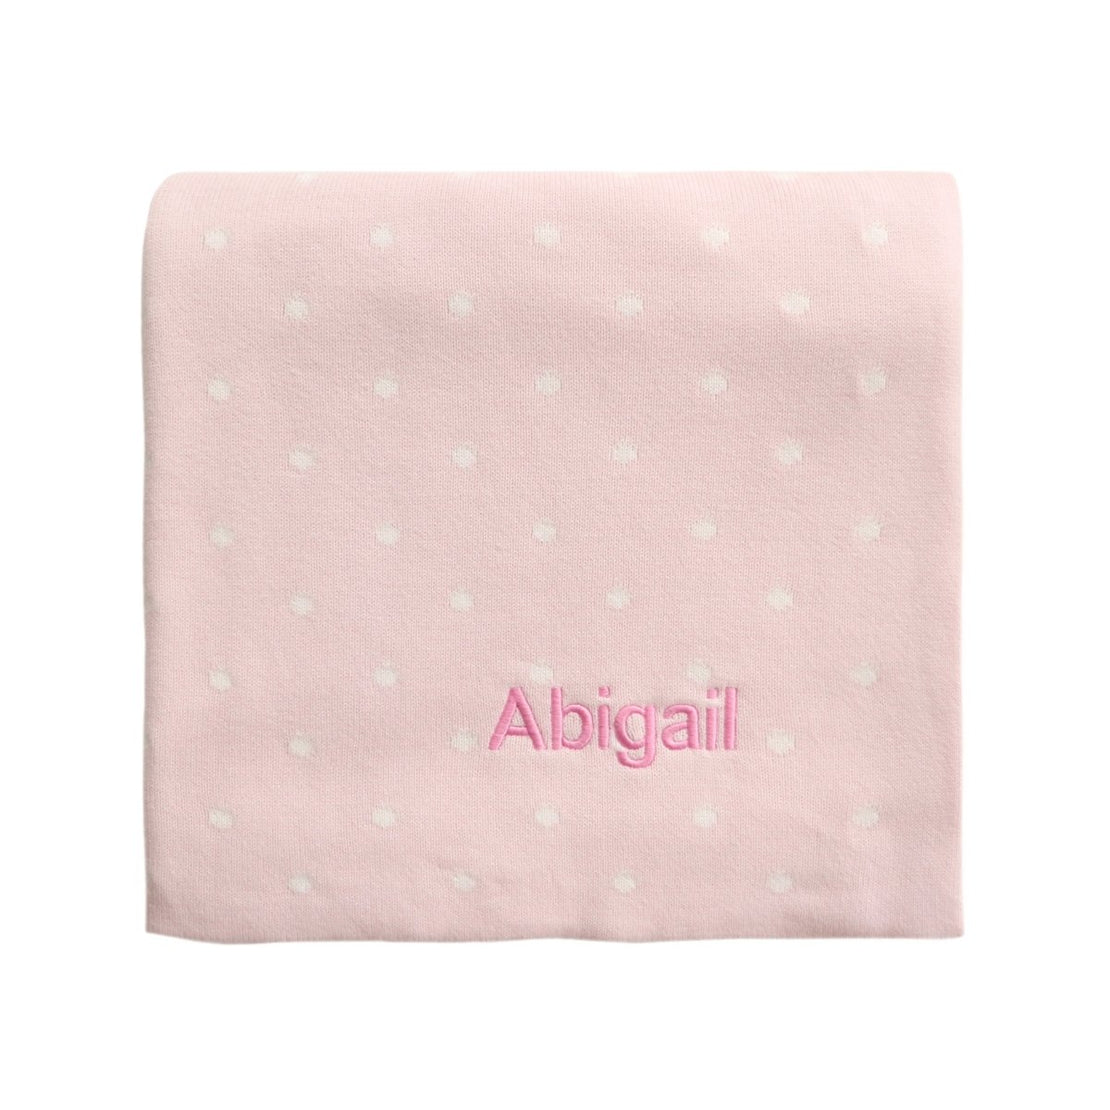 Personalised Polka Dot Blanket - Pink - LOVINGLY SIGNED (HK)